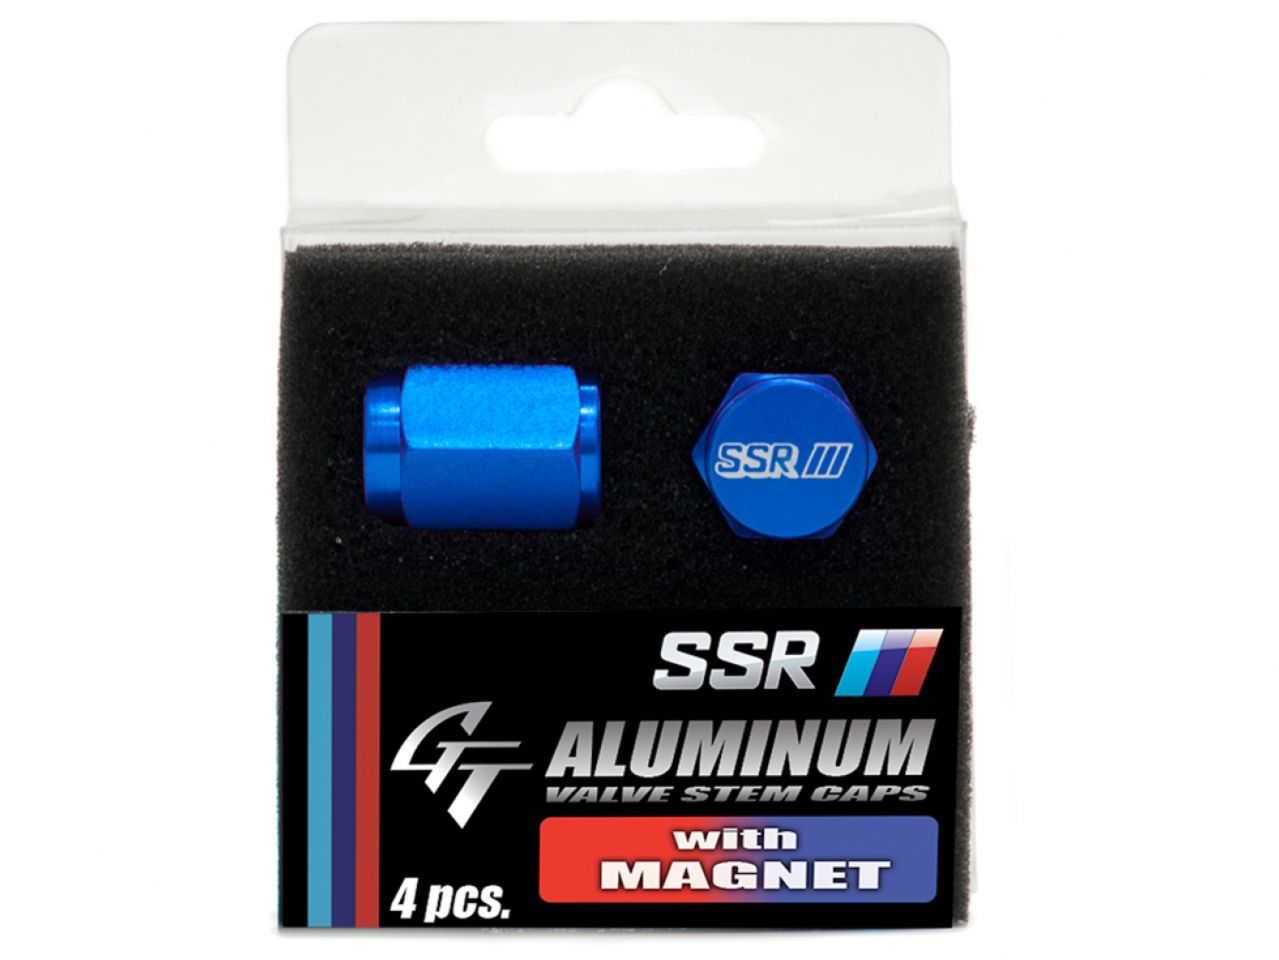 SSR Aluminum Valve Stem Cap w/ Magnet (4 Pcs.) - Blue